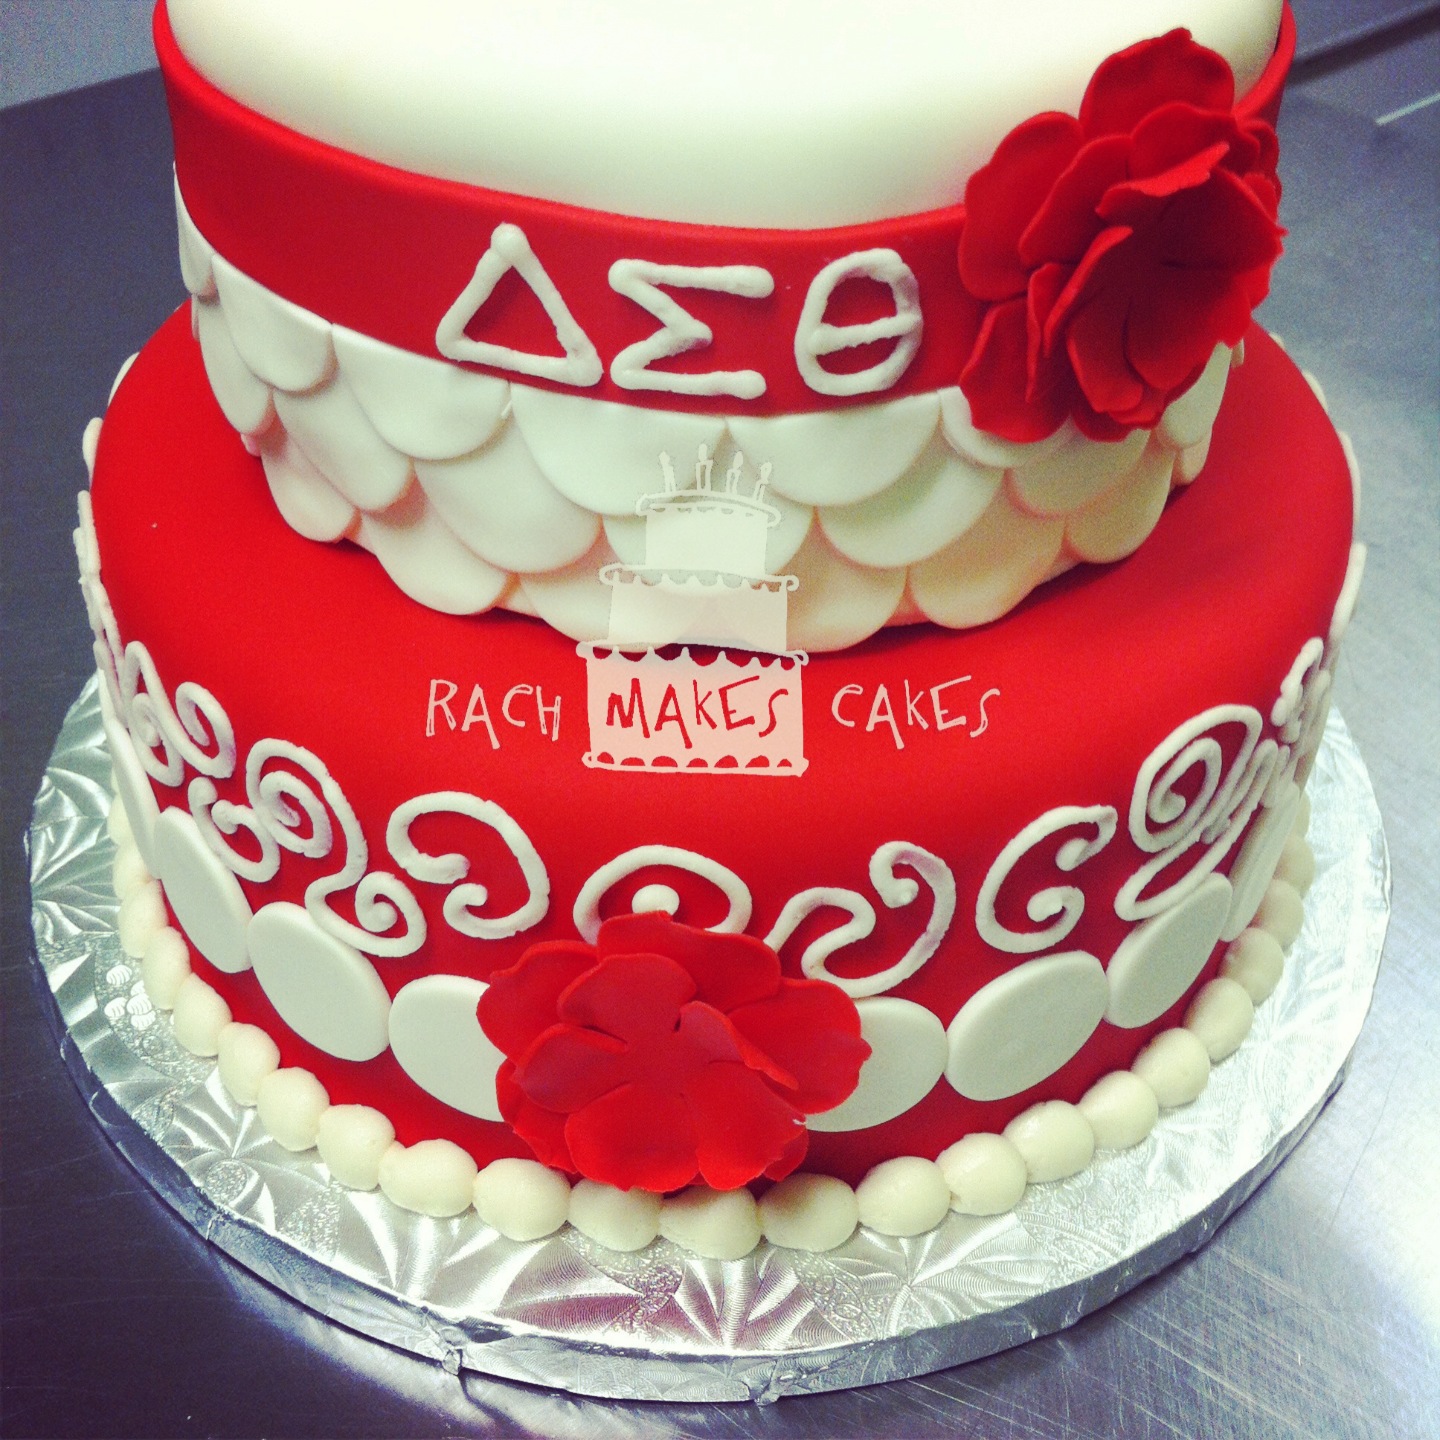 40 & Fabulous — Rach Makes Cakes - 1440 x 1440 jpeg 623kB